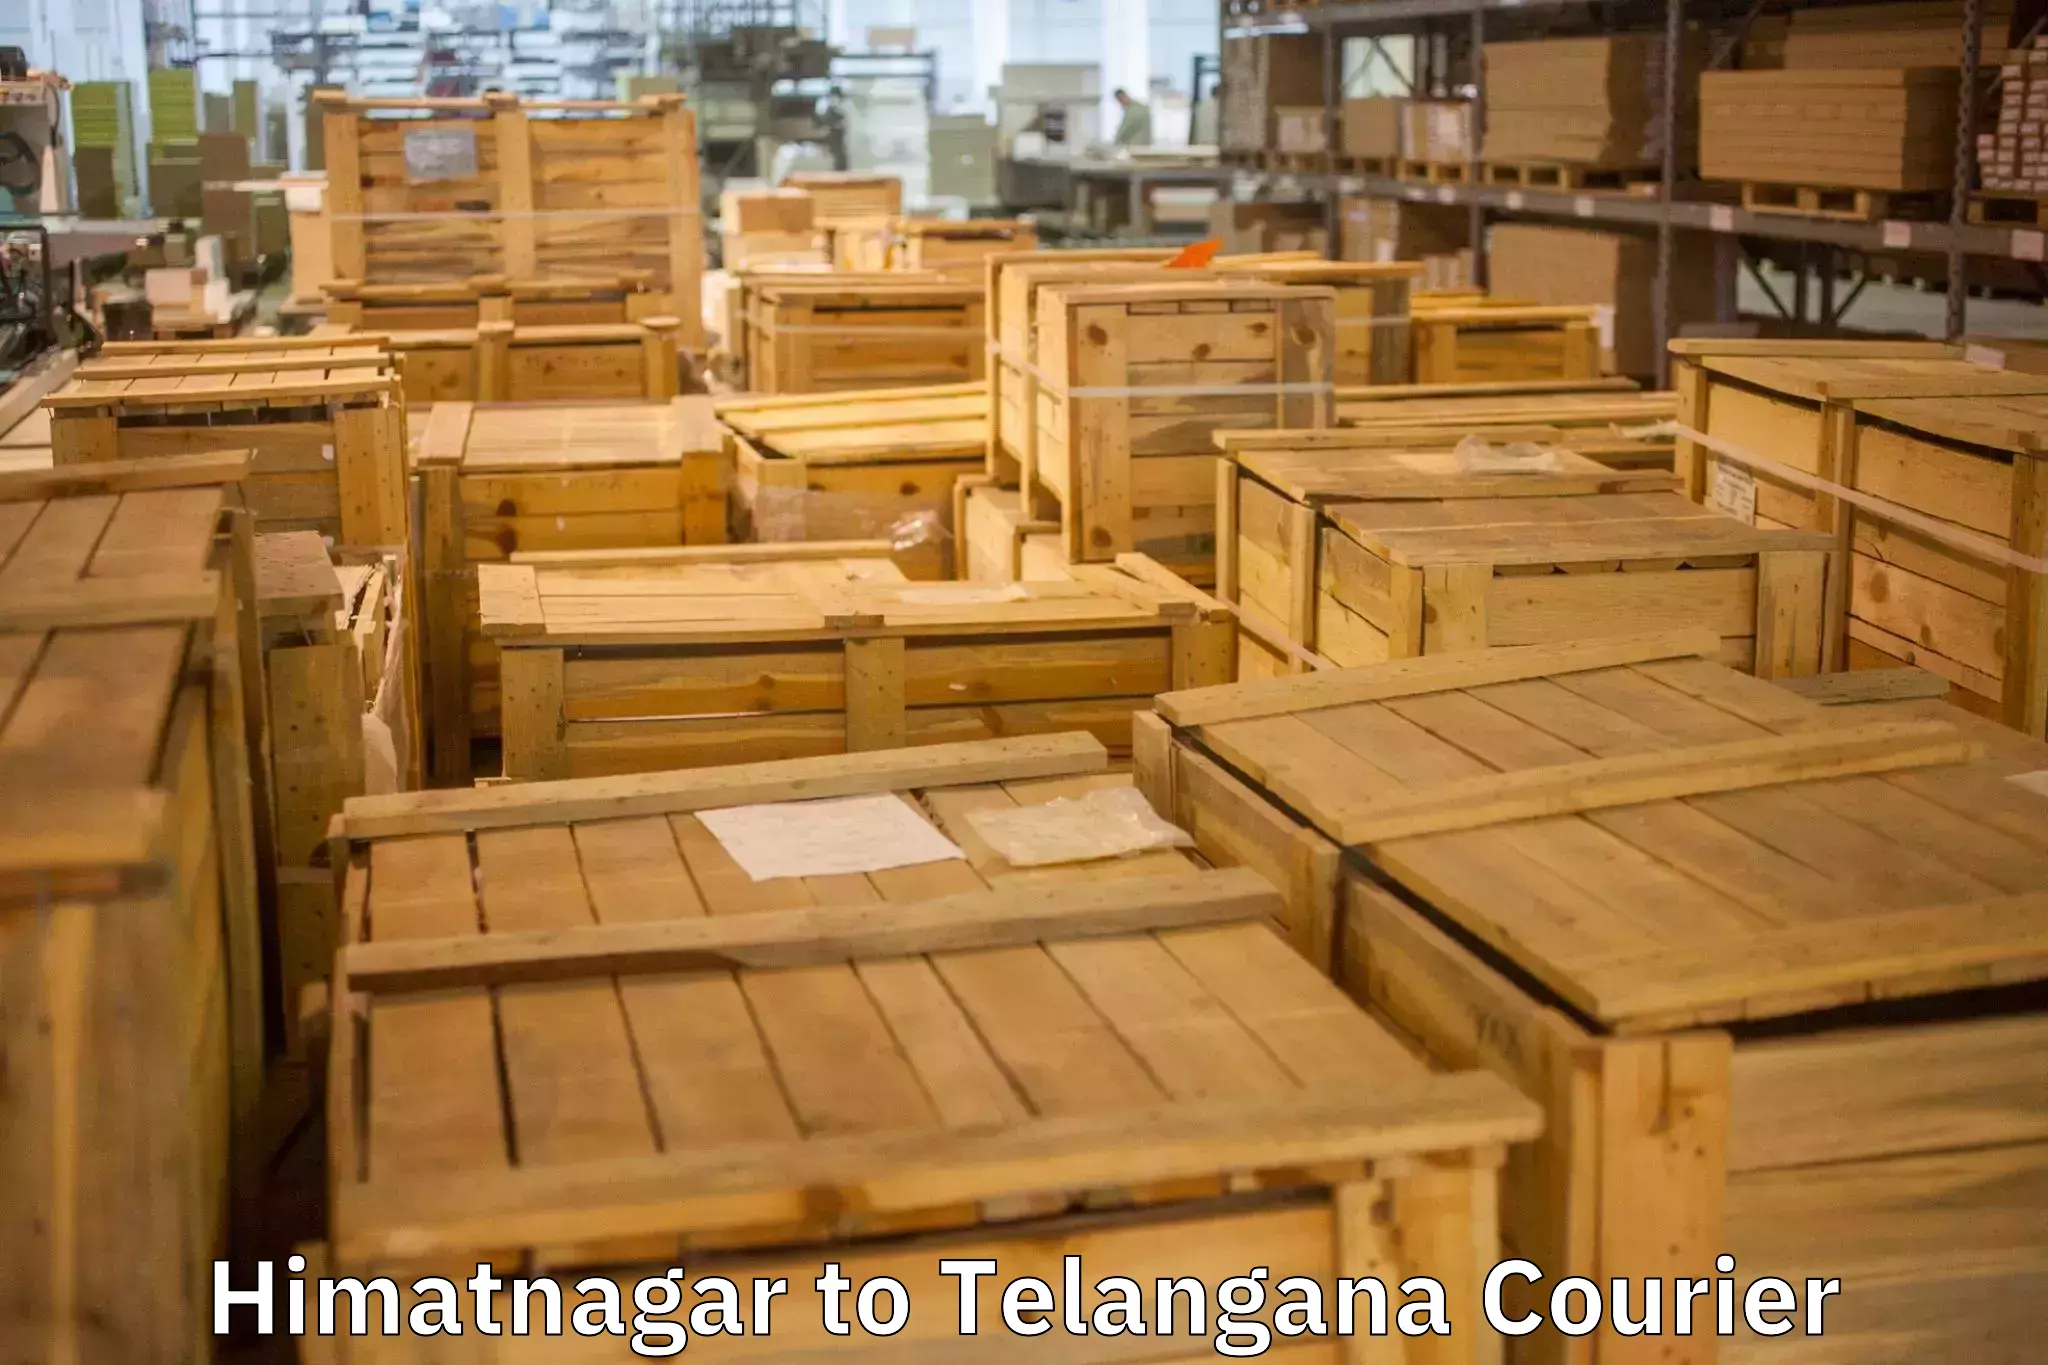 Professional movers in Himatnagar to Telangana